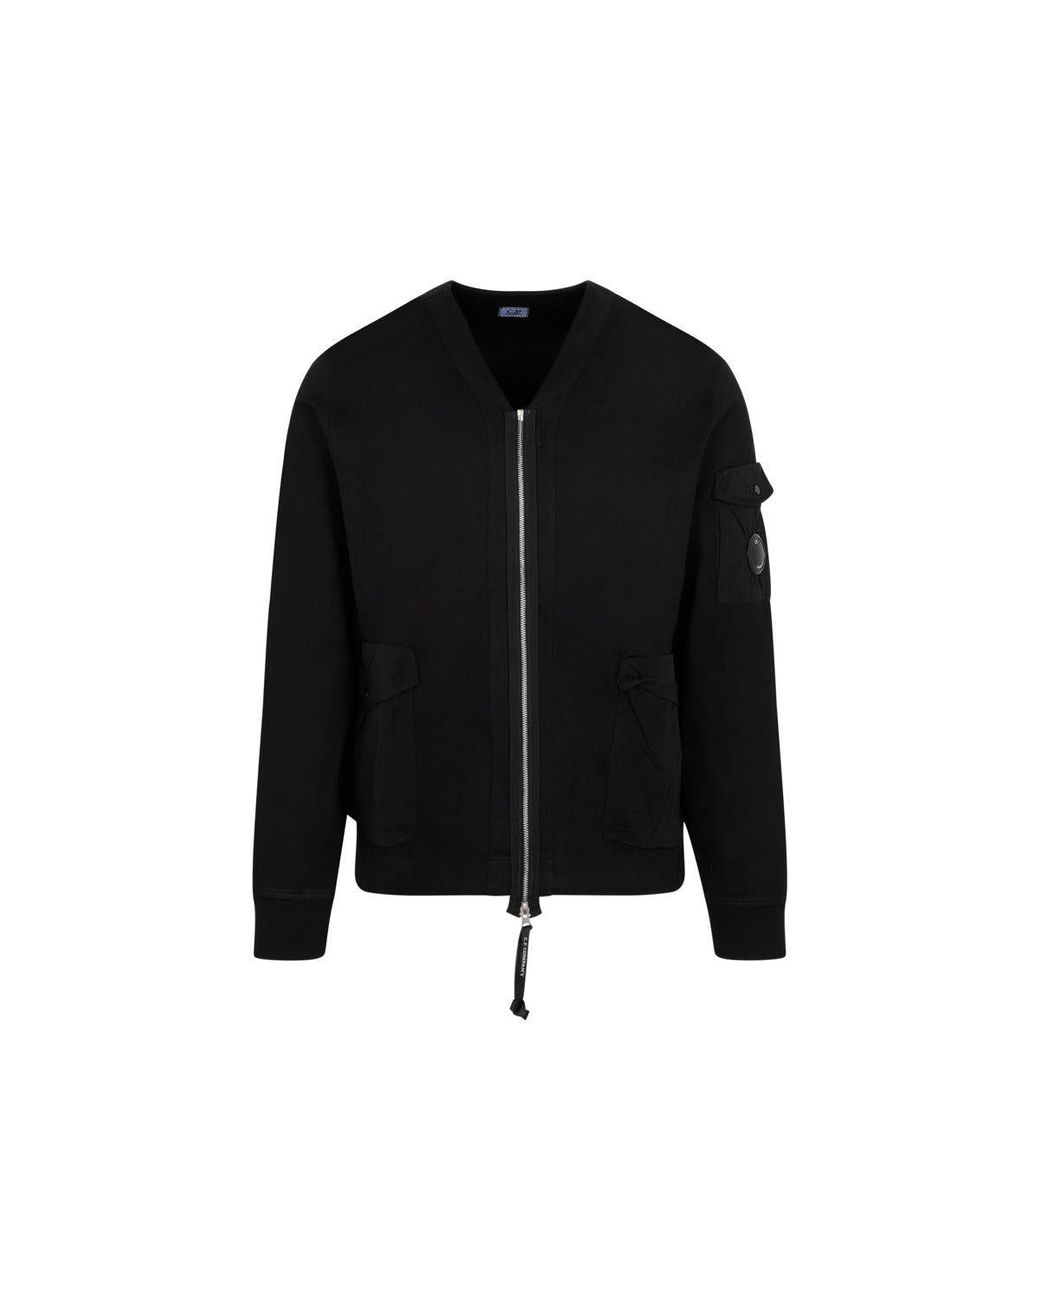 C.P. Company Mercerized Zipped Cardigan Sweater in Black for Men | Lyst